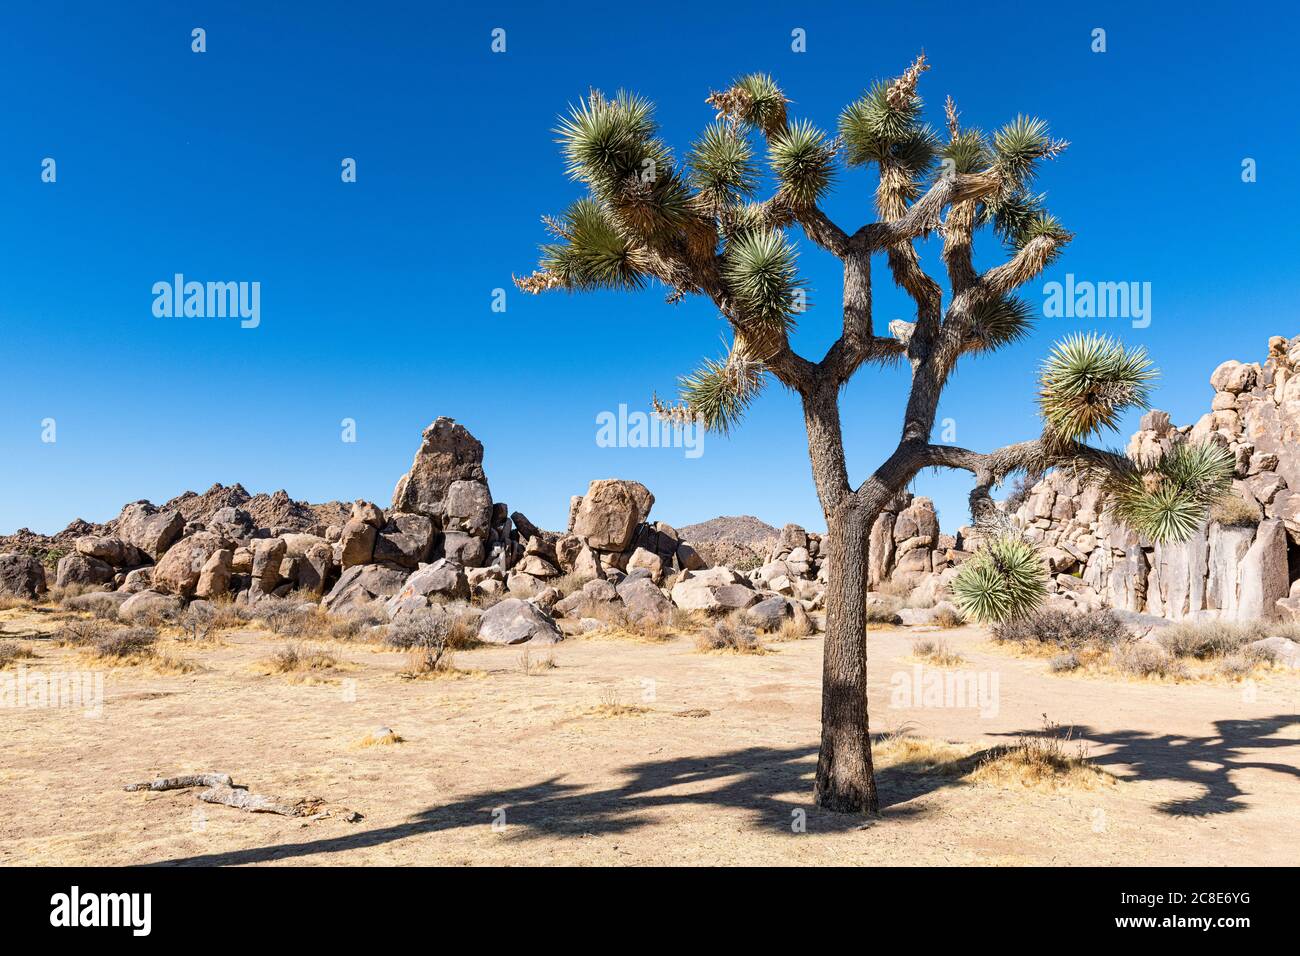 USA, California, Joshua tree (Yucca Brevifolia) in Joshua Tree National Park Stock Photo